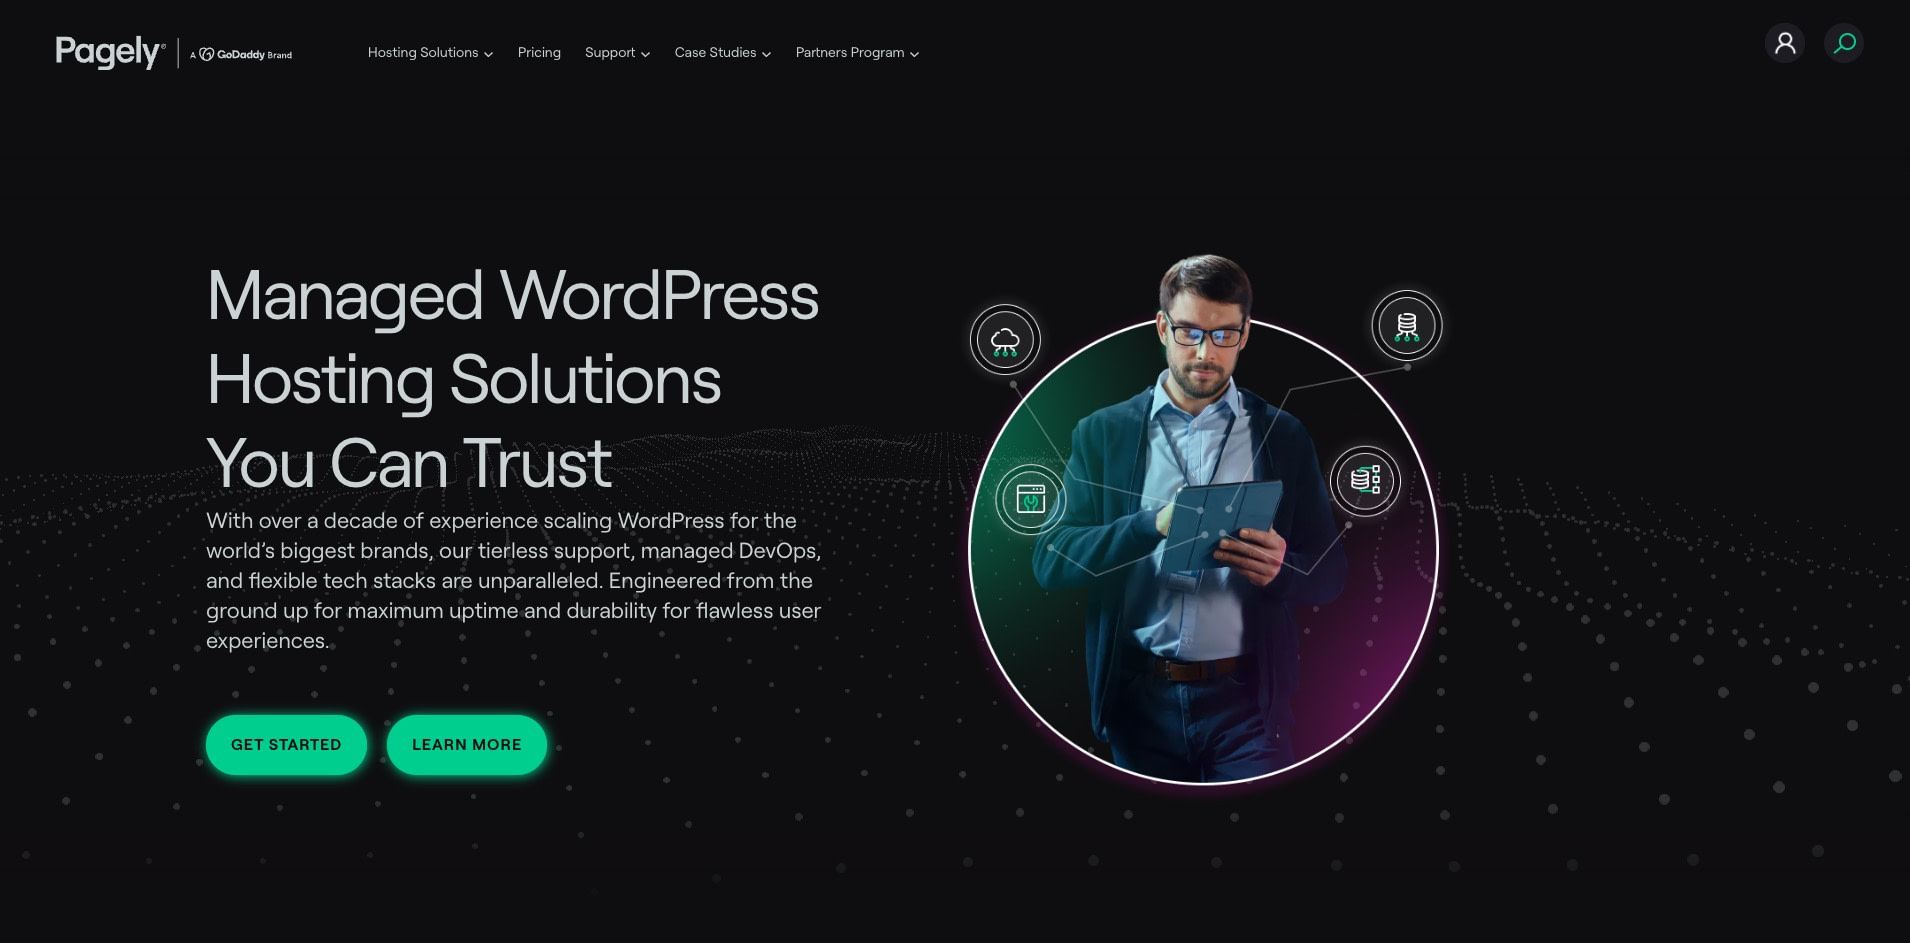 Pagely's enterprise WordPress hosting